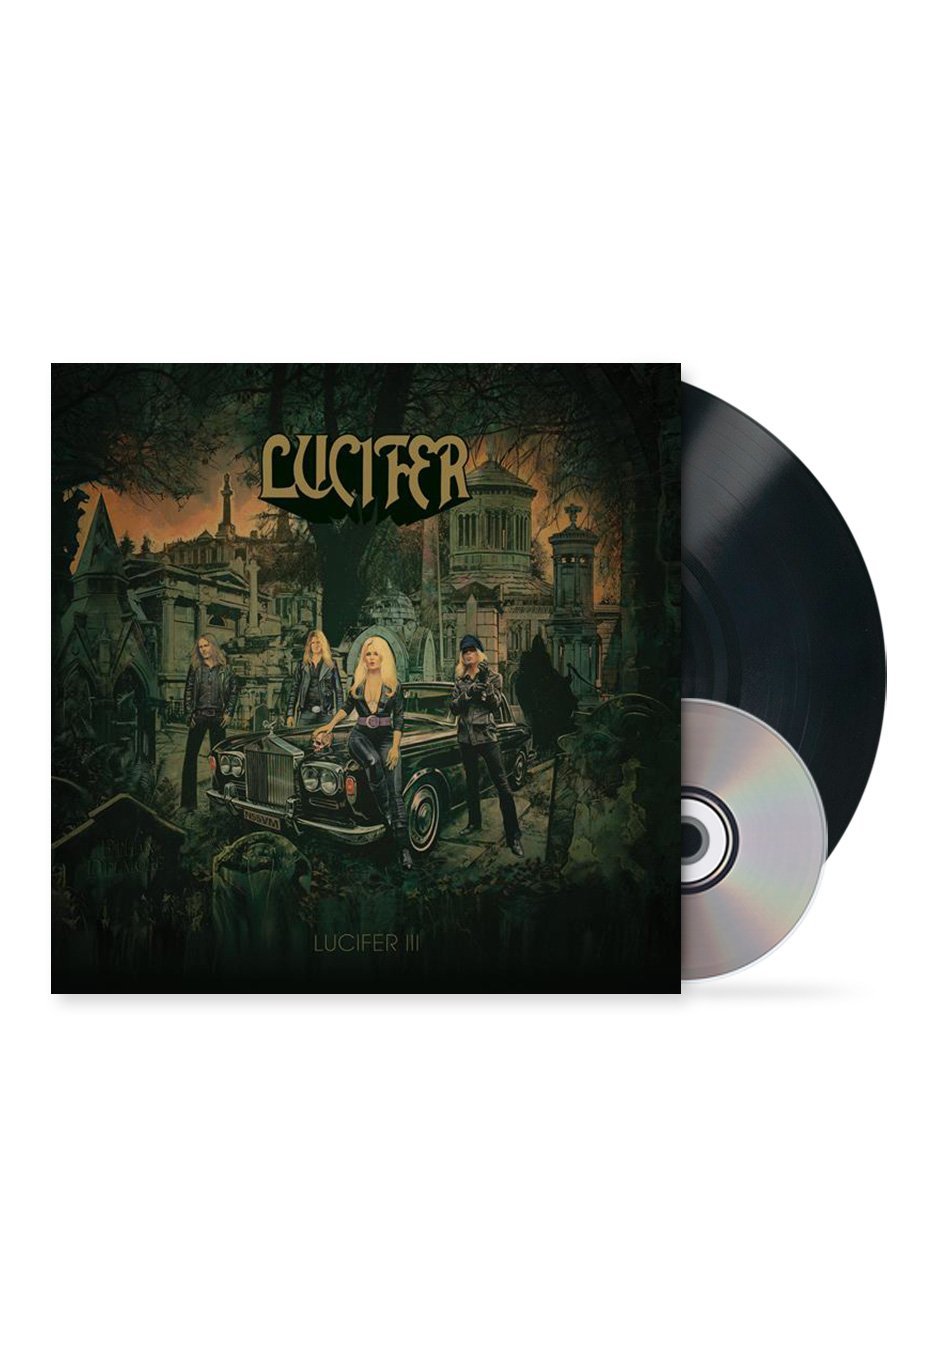 Lucifer - Lucifer III Ltd. - Vinyl + CD